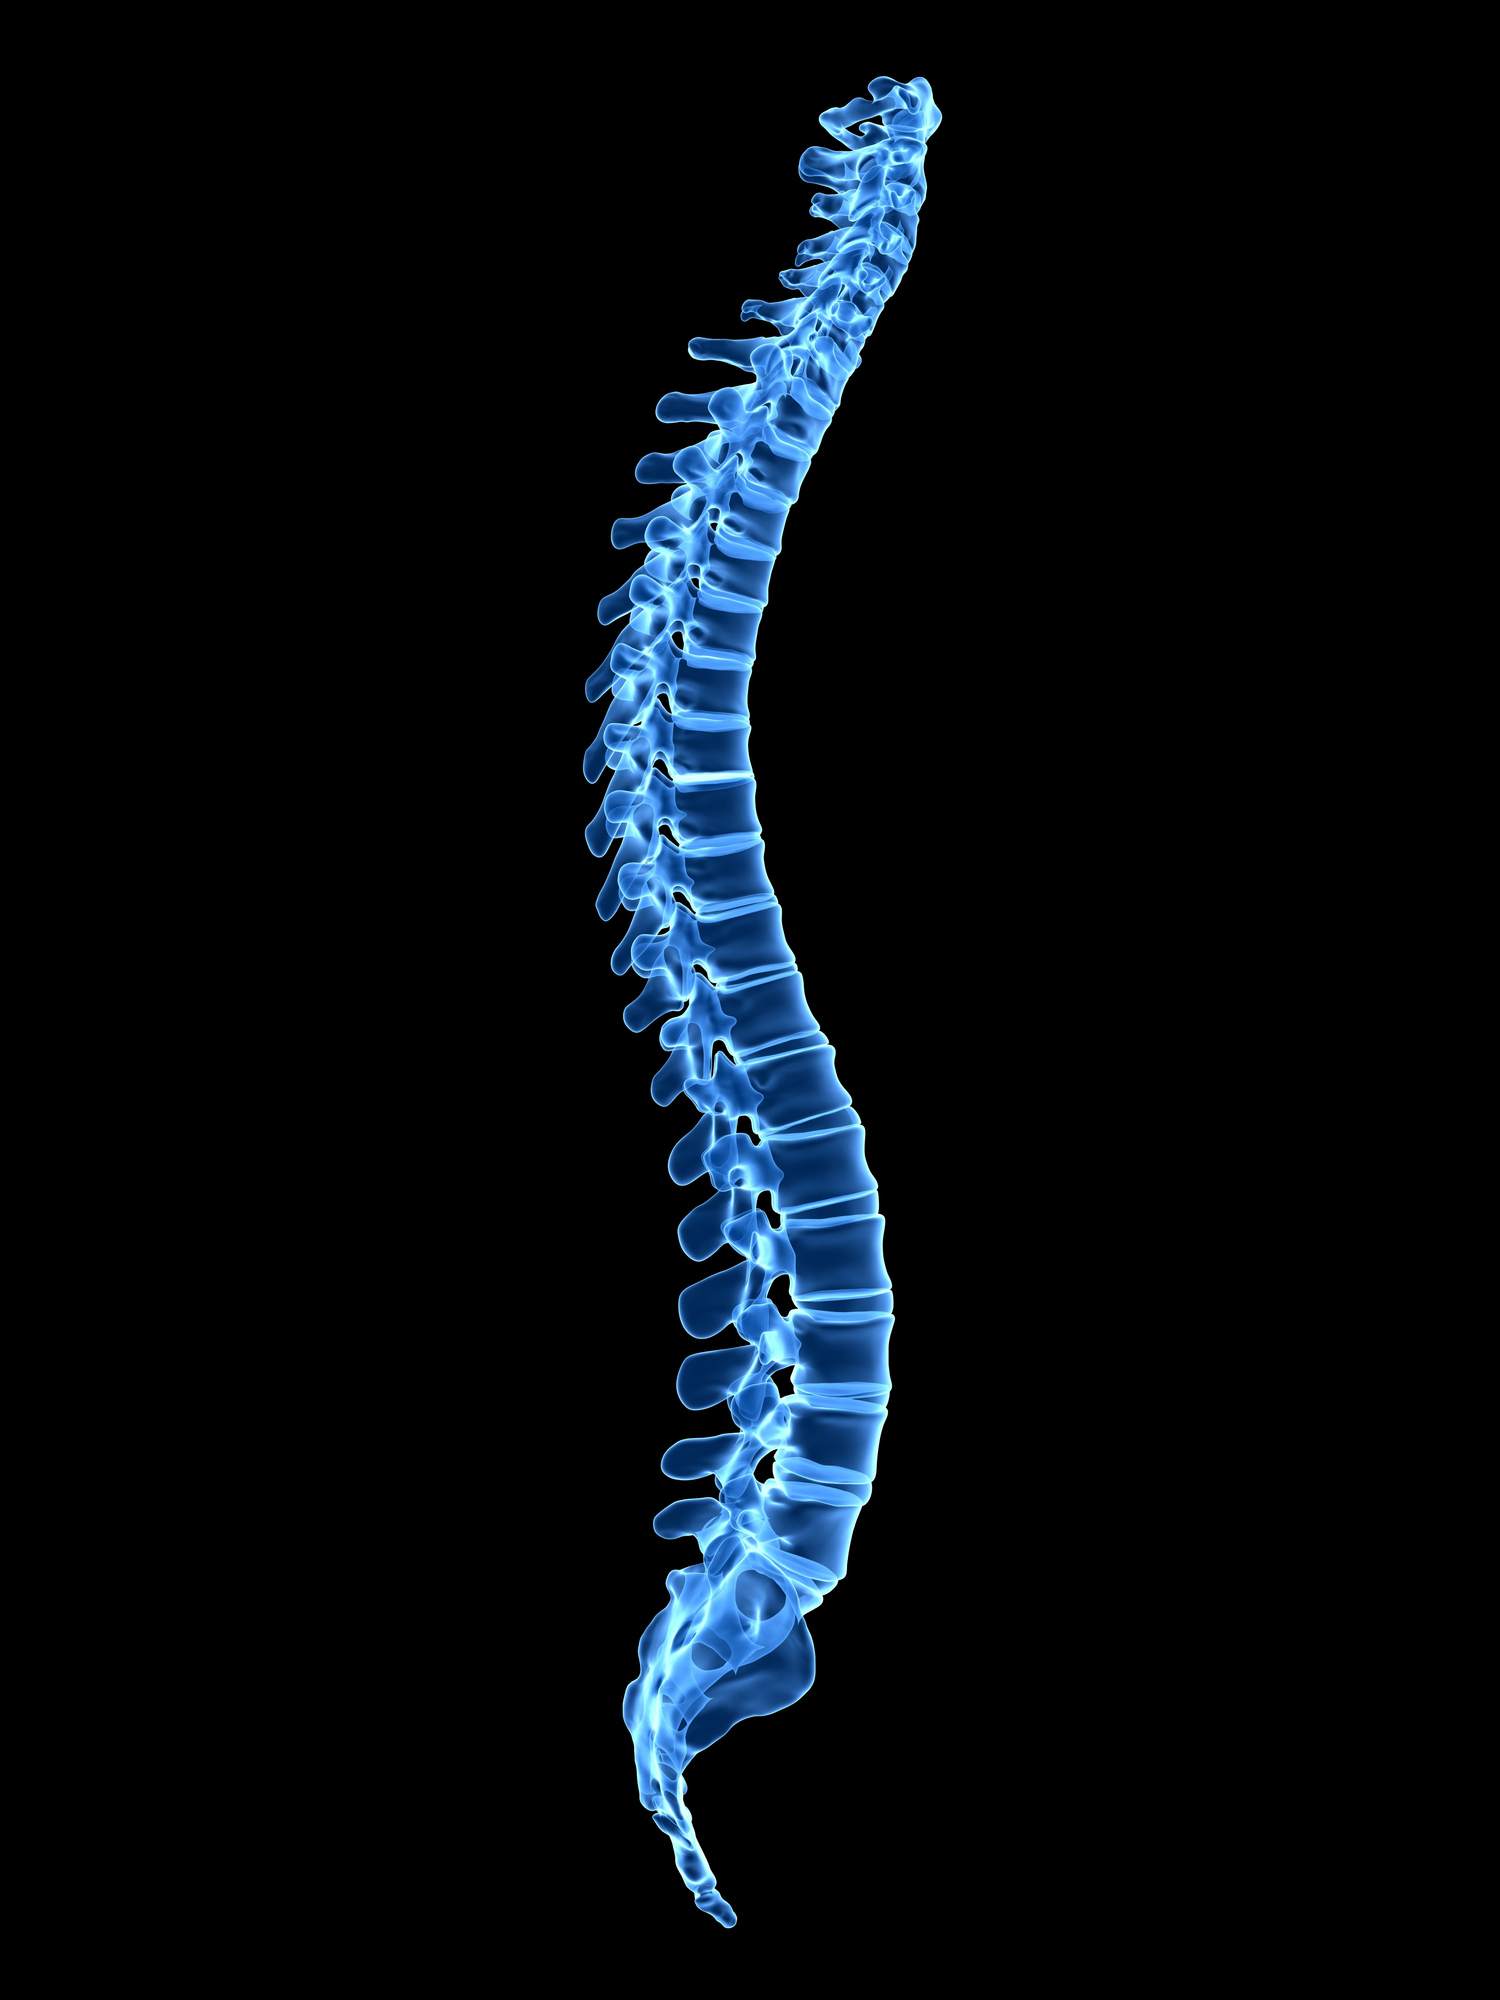 Human spine, illustration